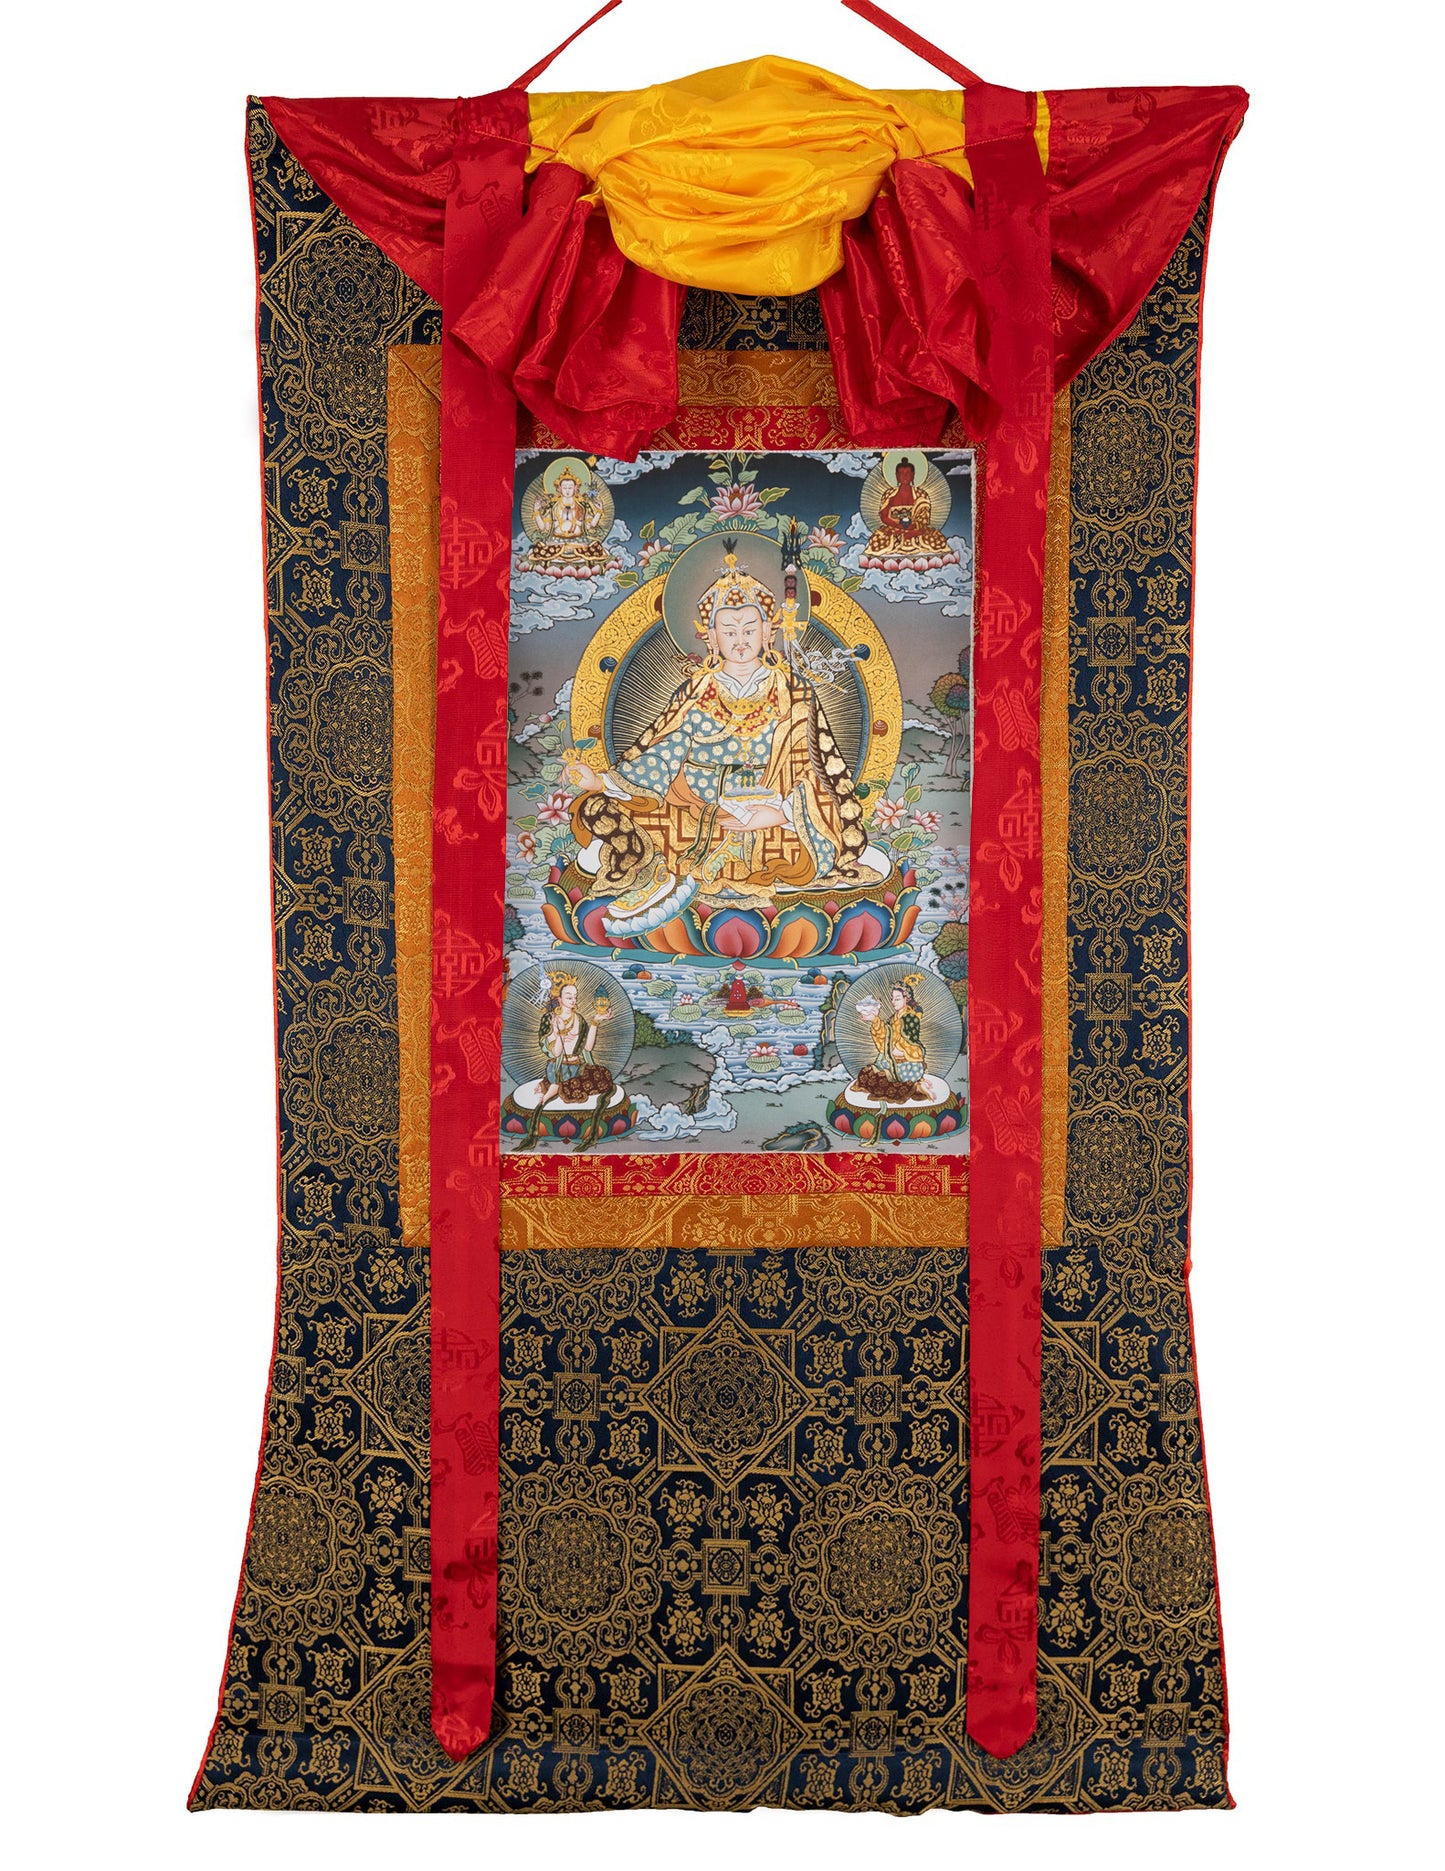 Guru Rinpoche Thangka XIV